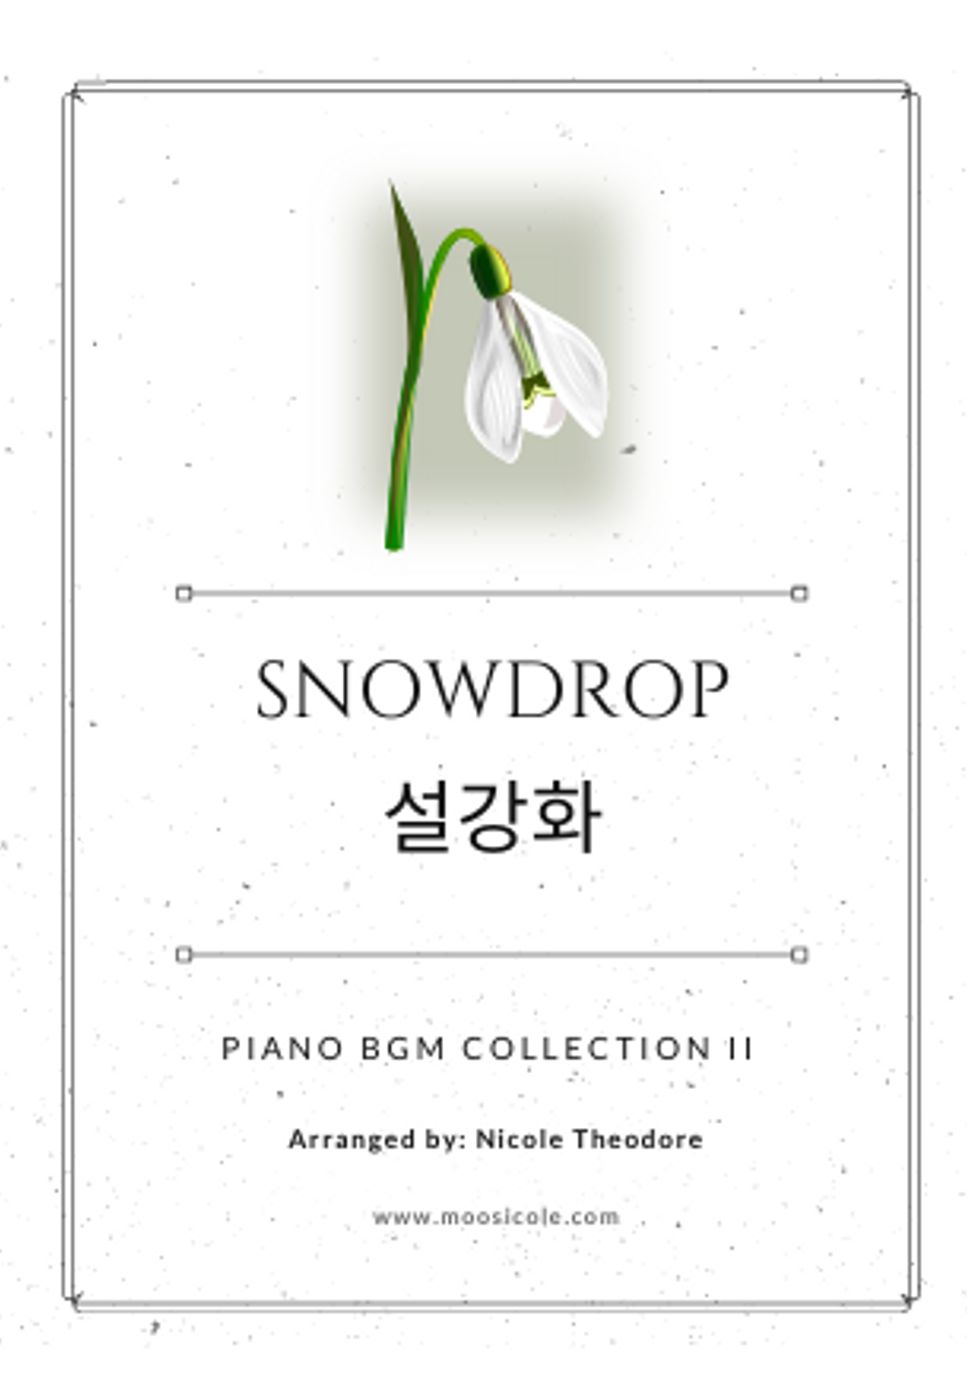 Snowdrop - Snowdrop Piano BGM Album II by Nicole Theodore (moosicole)